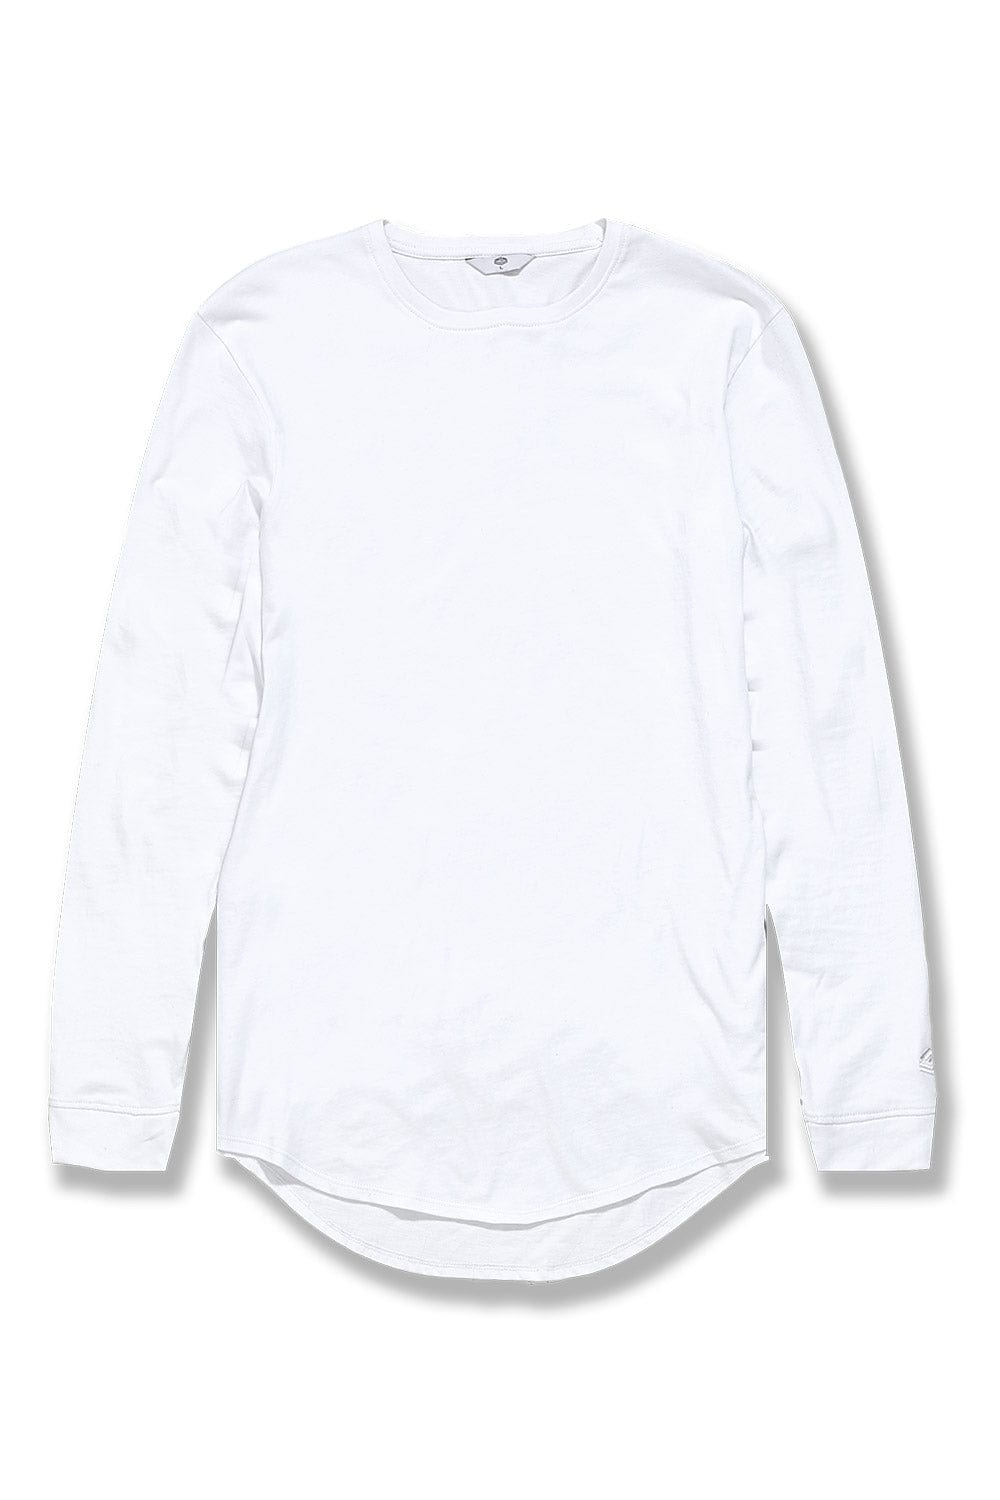 Jordan Craig Stockpile L/S T-Shirt (White) White / S